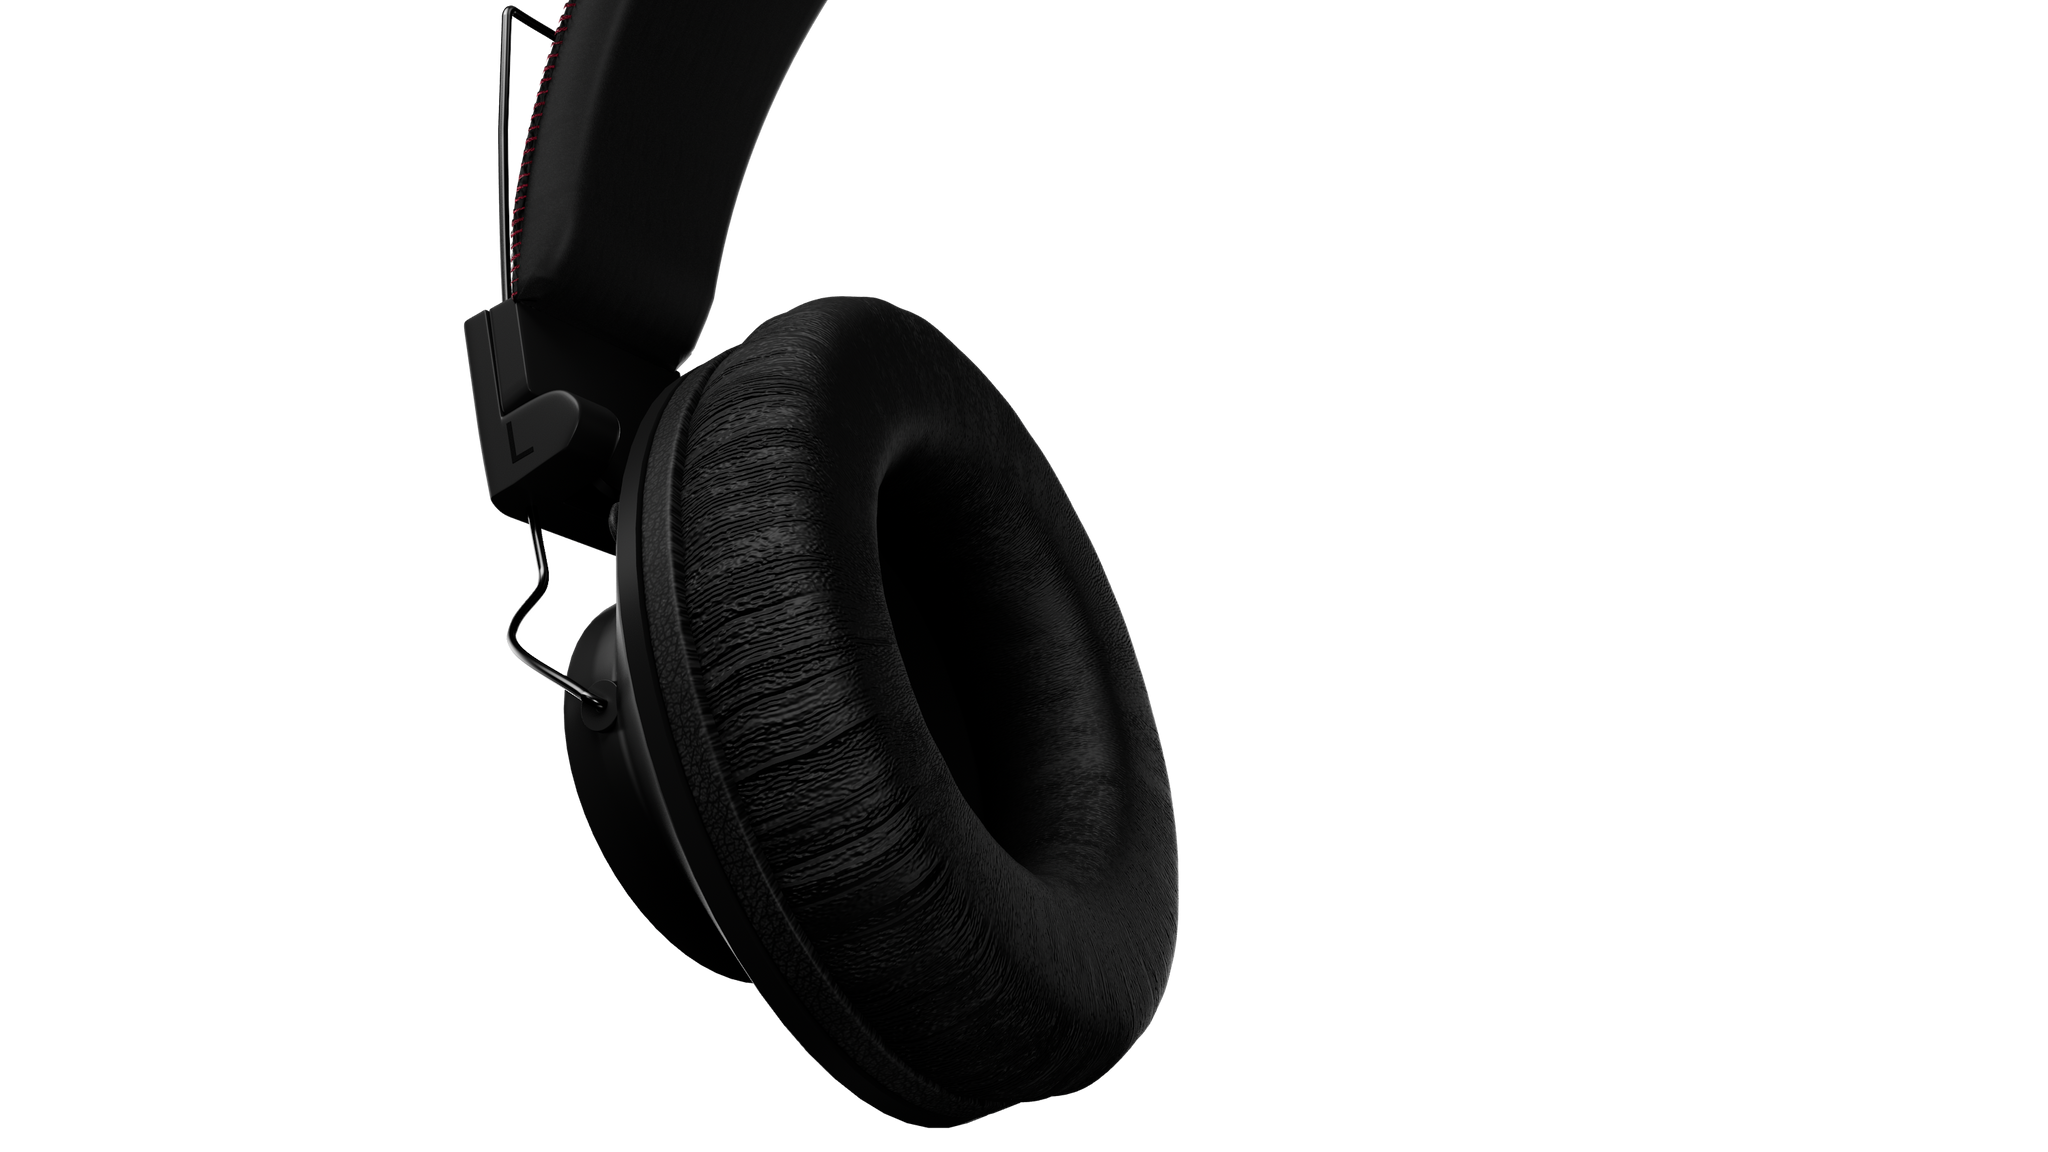 Blade 2 - Wireless Headphones